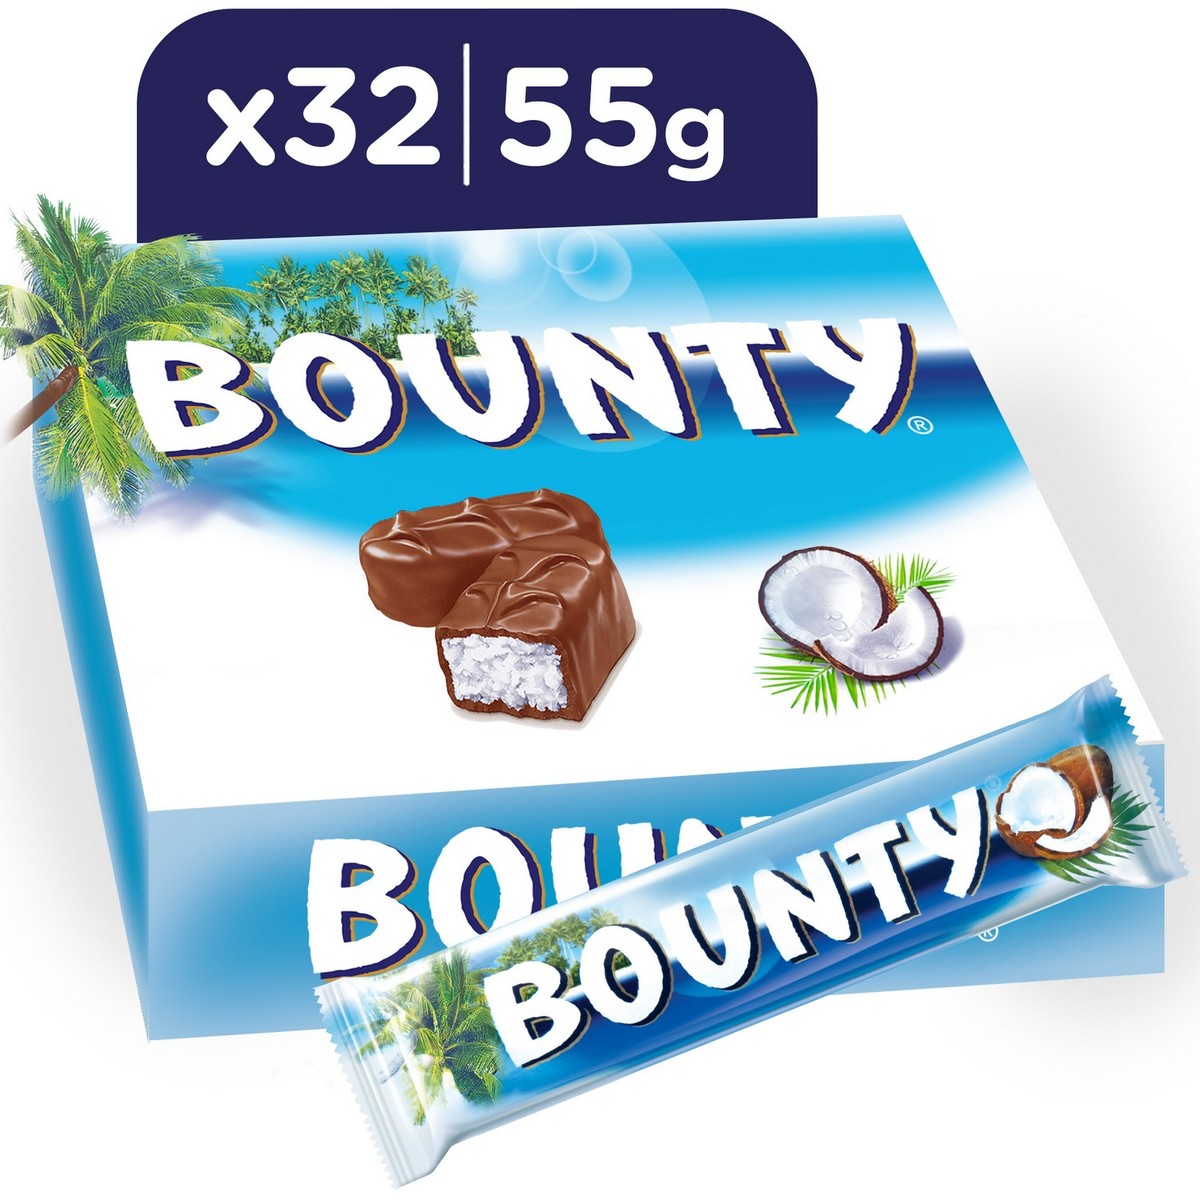 Bounty Milk Chocolate Bar 55 g